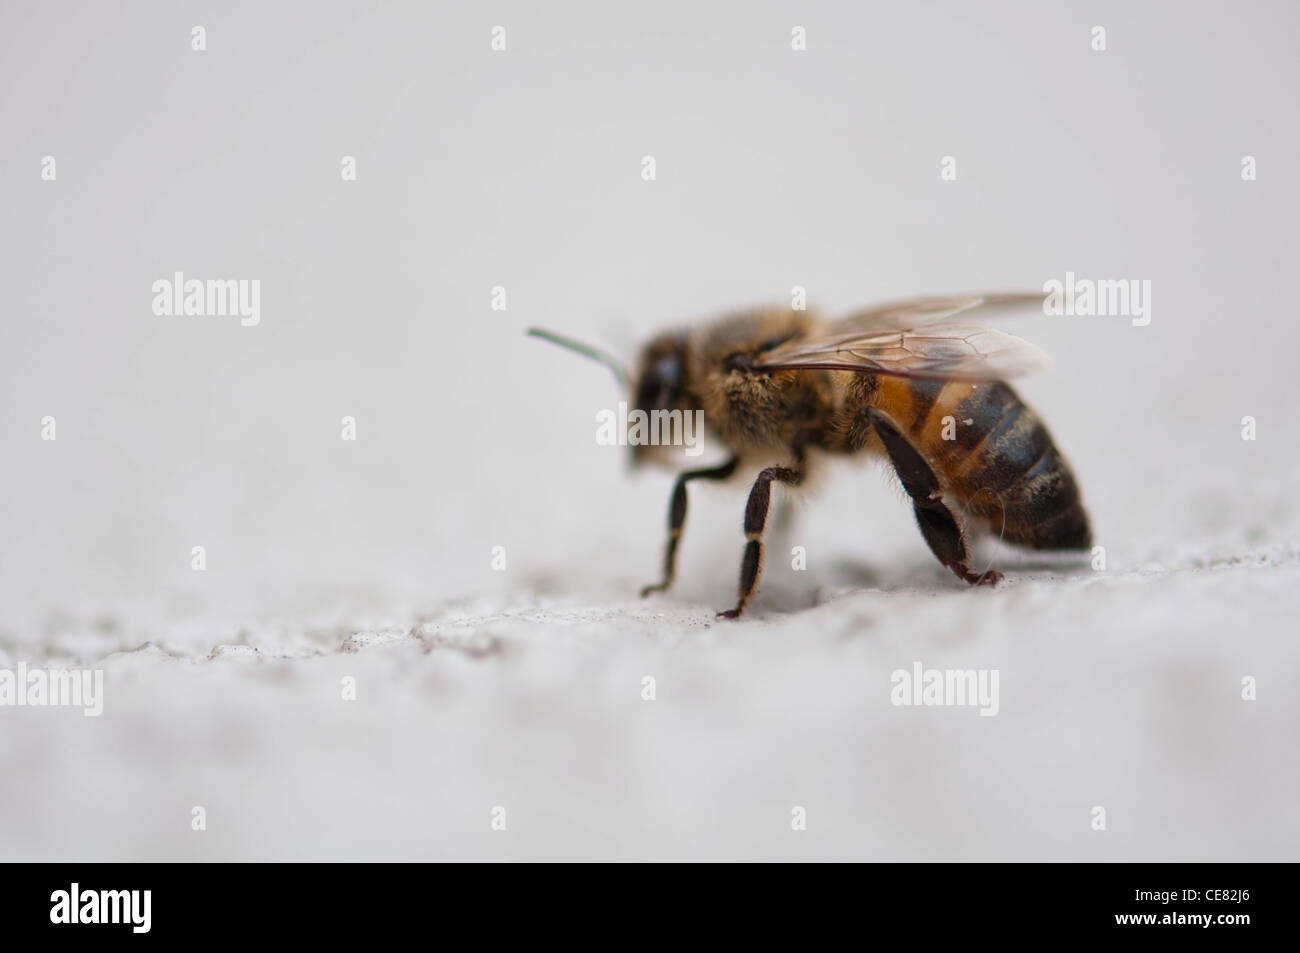 Bee close up Stock Photo